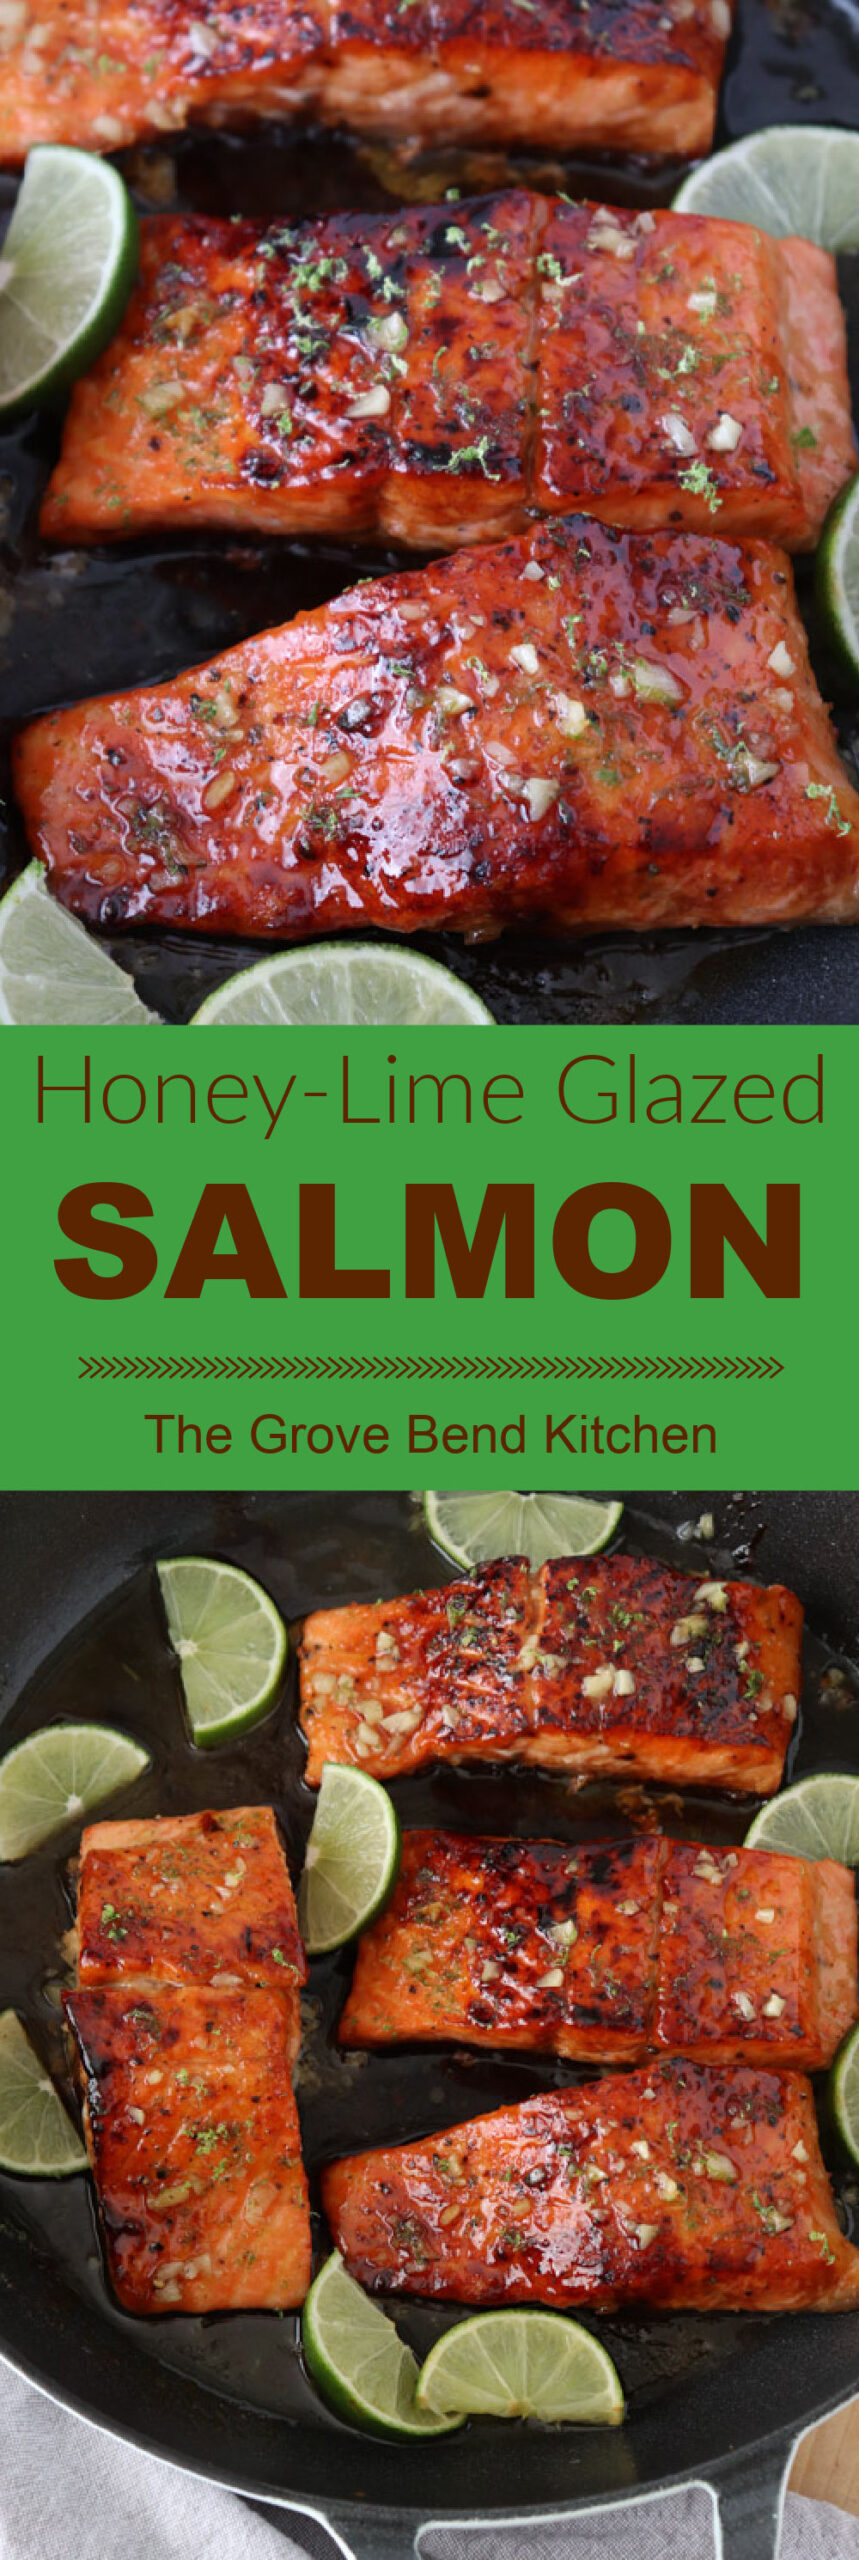 Honey-Lime Glazed Salmon - The Grove Bend Kitchen